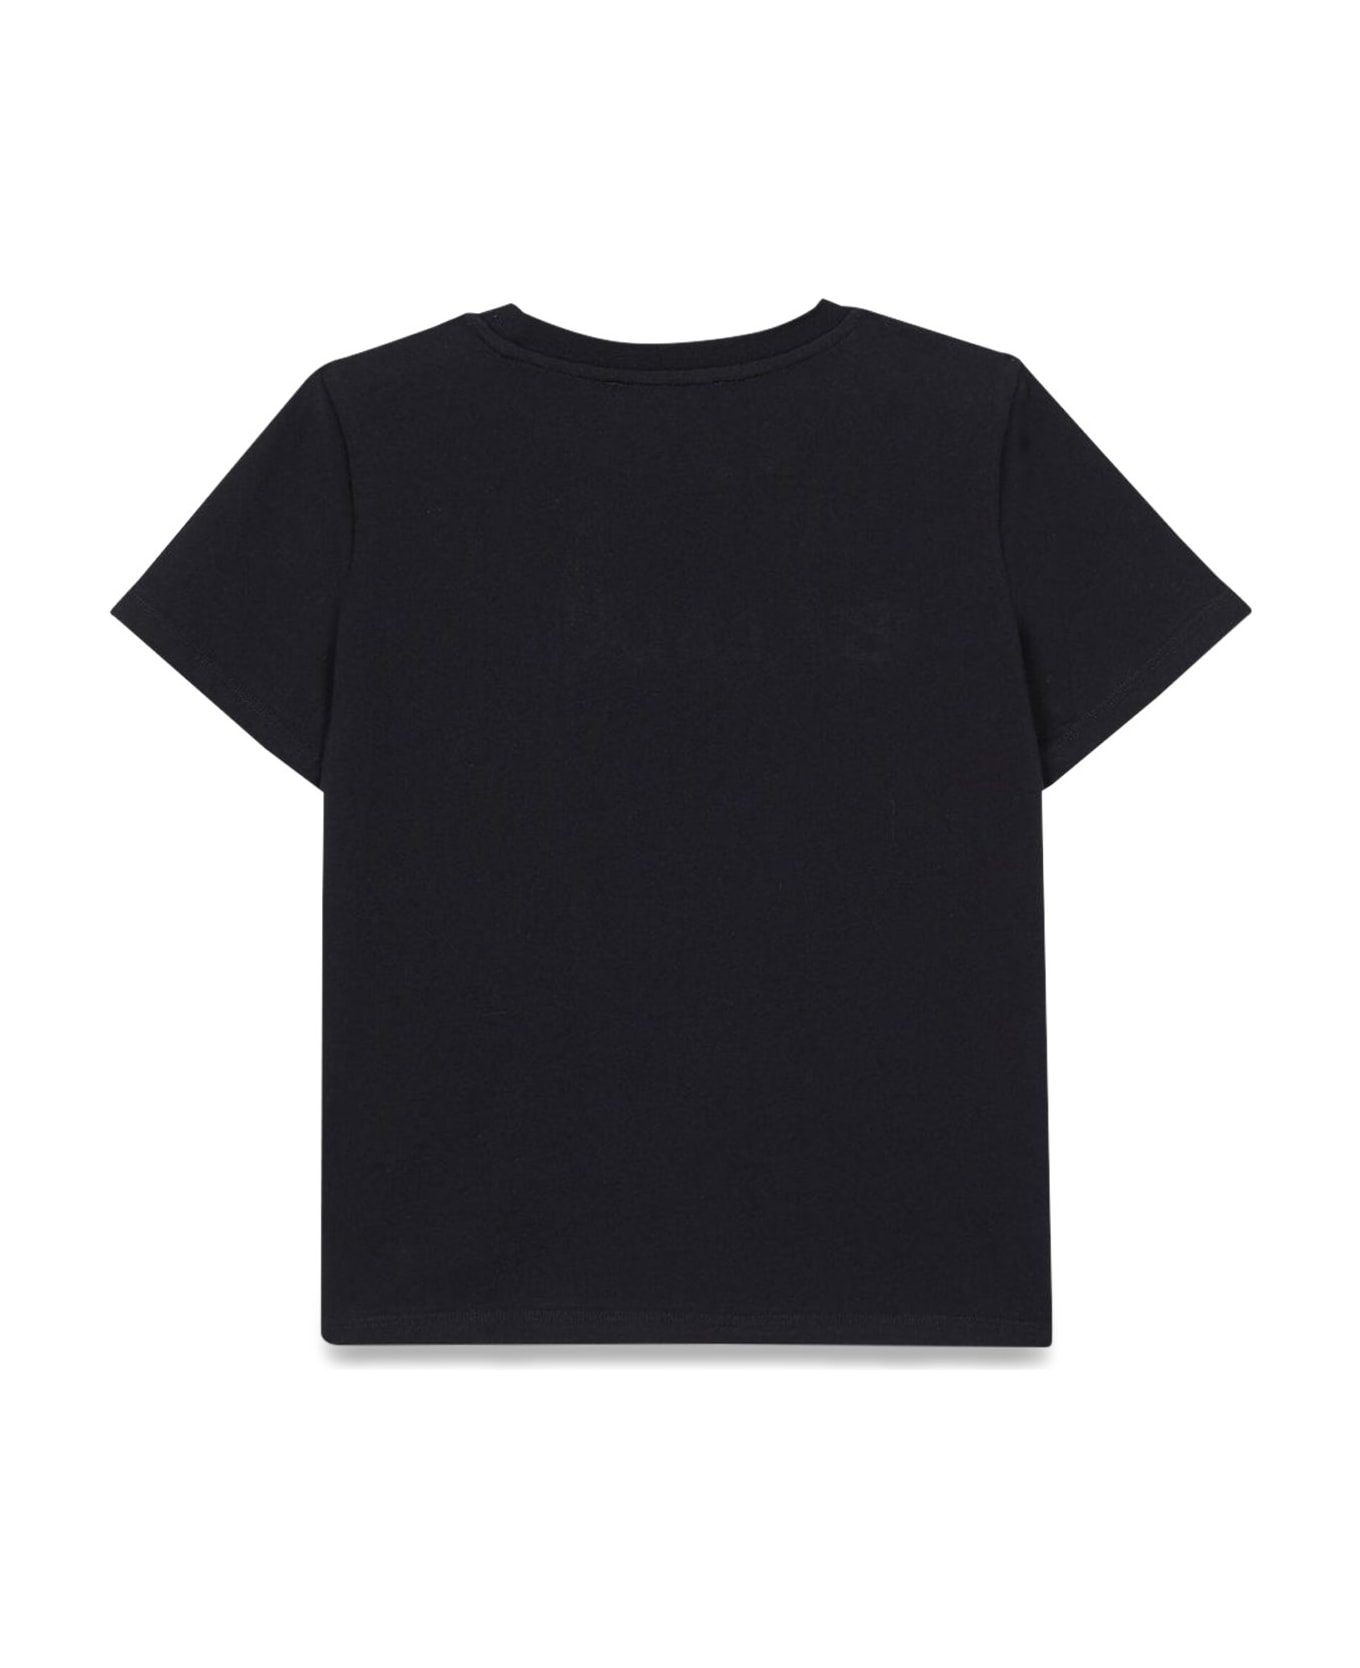 Balmain T-shirt/top - NERO